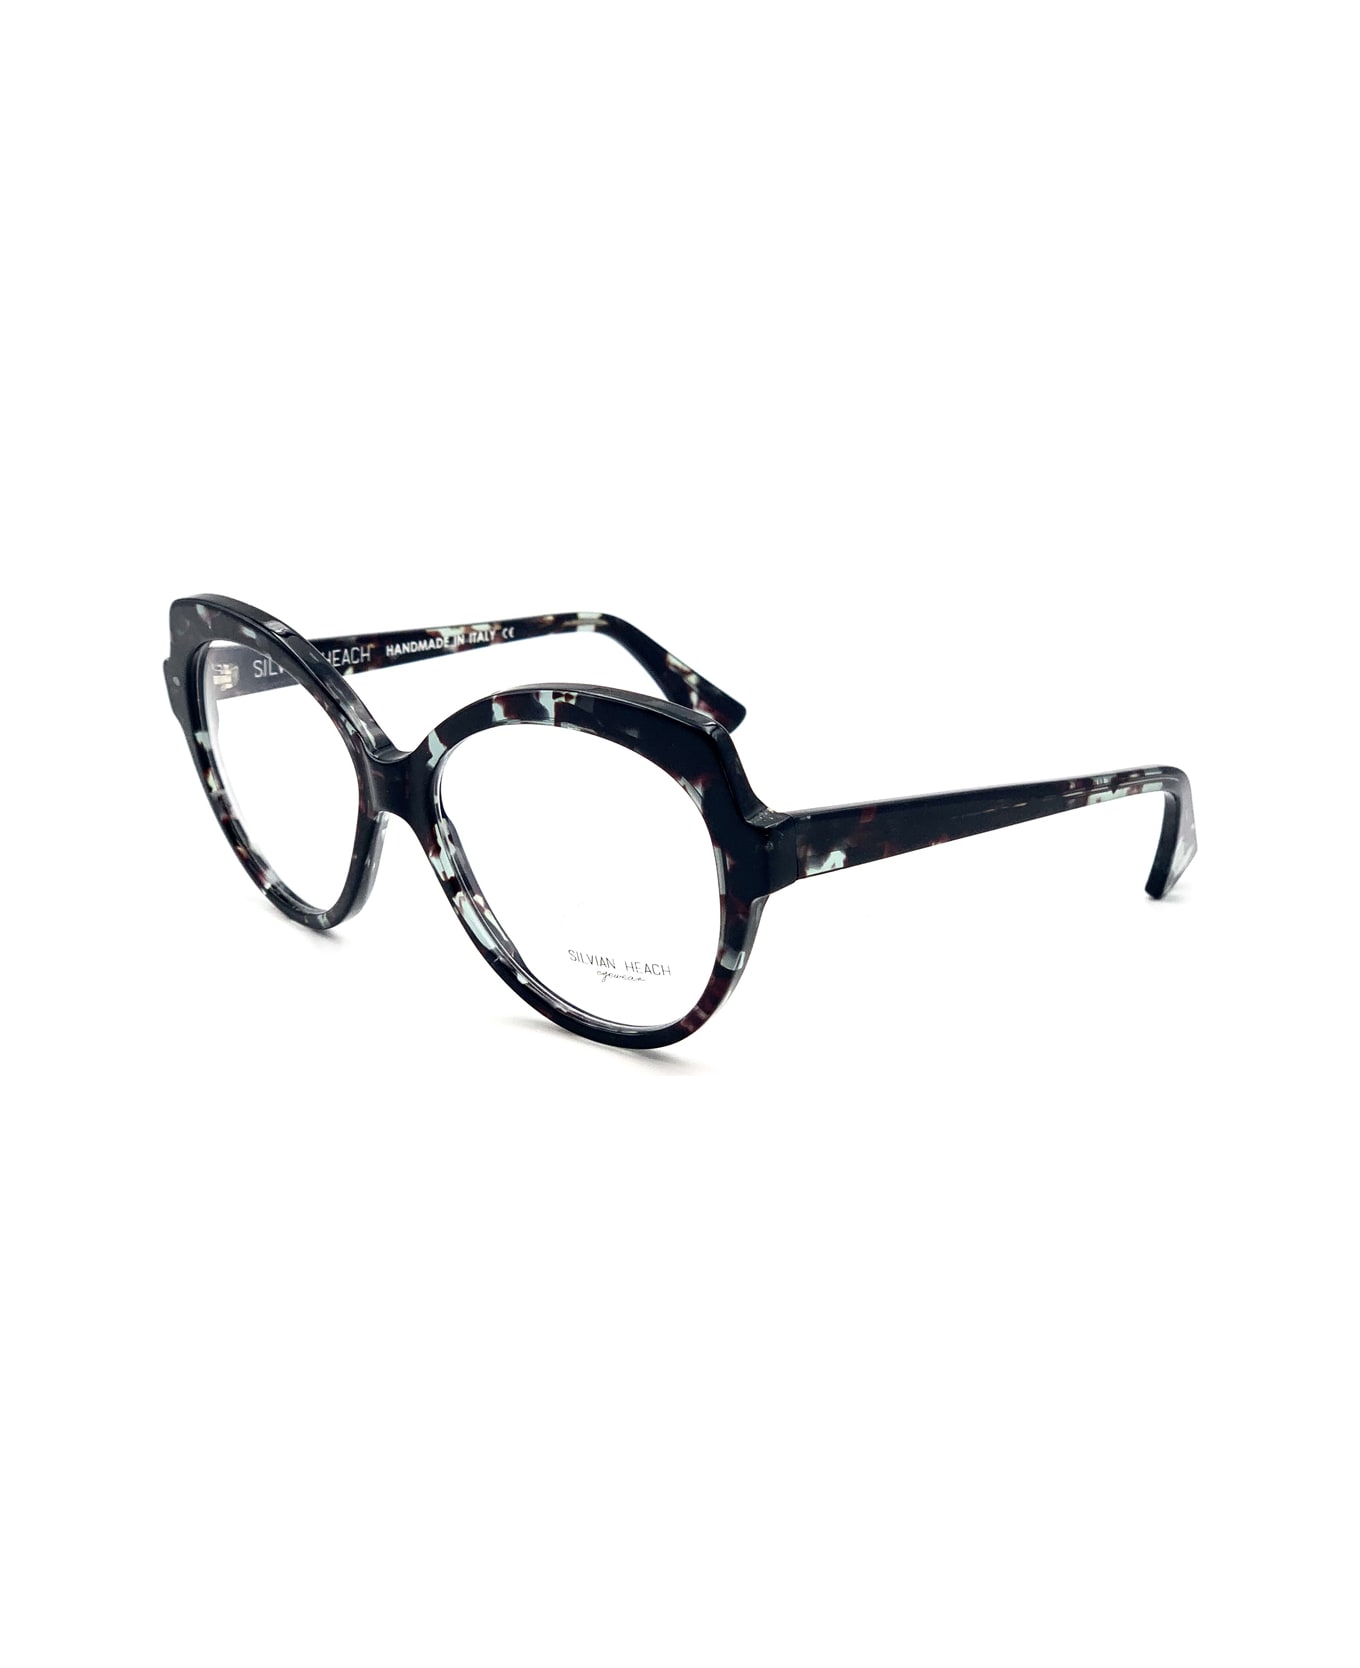 Silvian Heach Cosmopolitan Glasses - Nero アイウェア